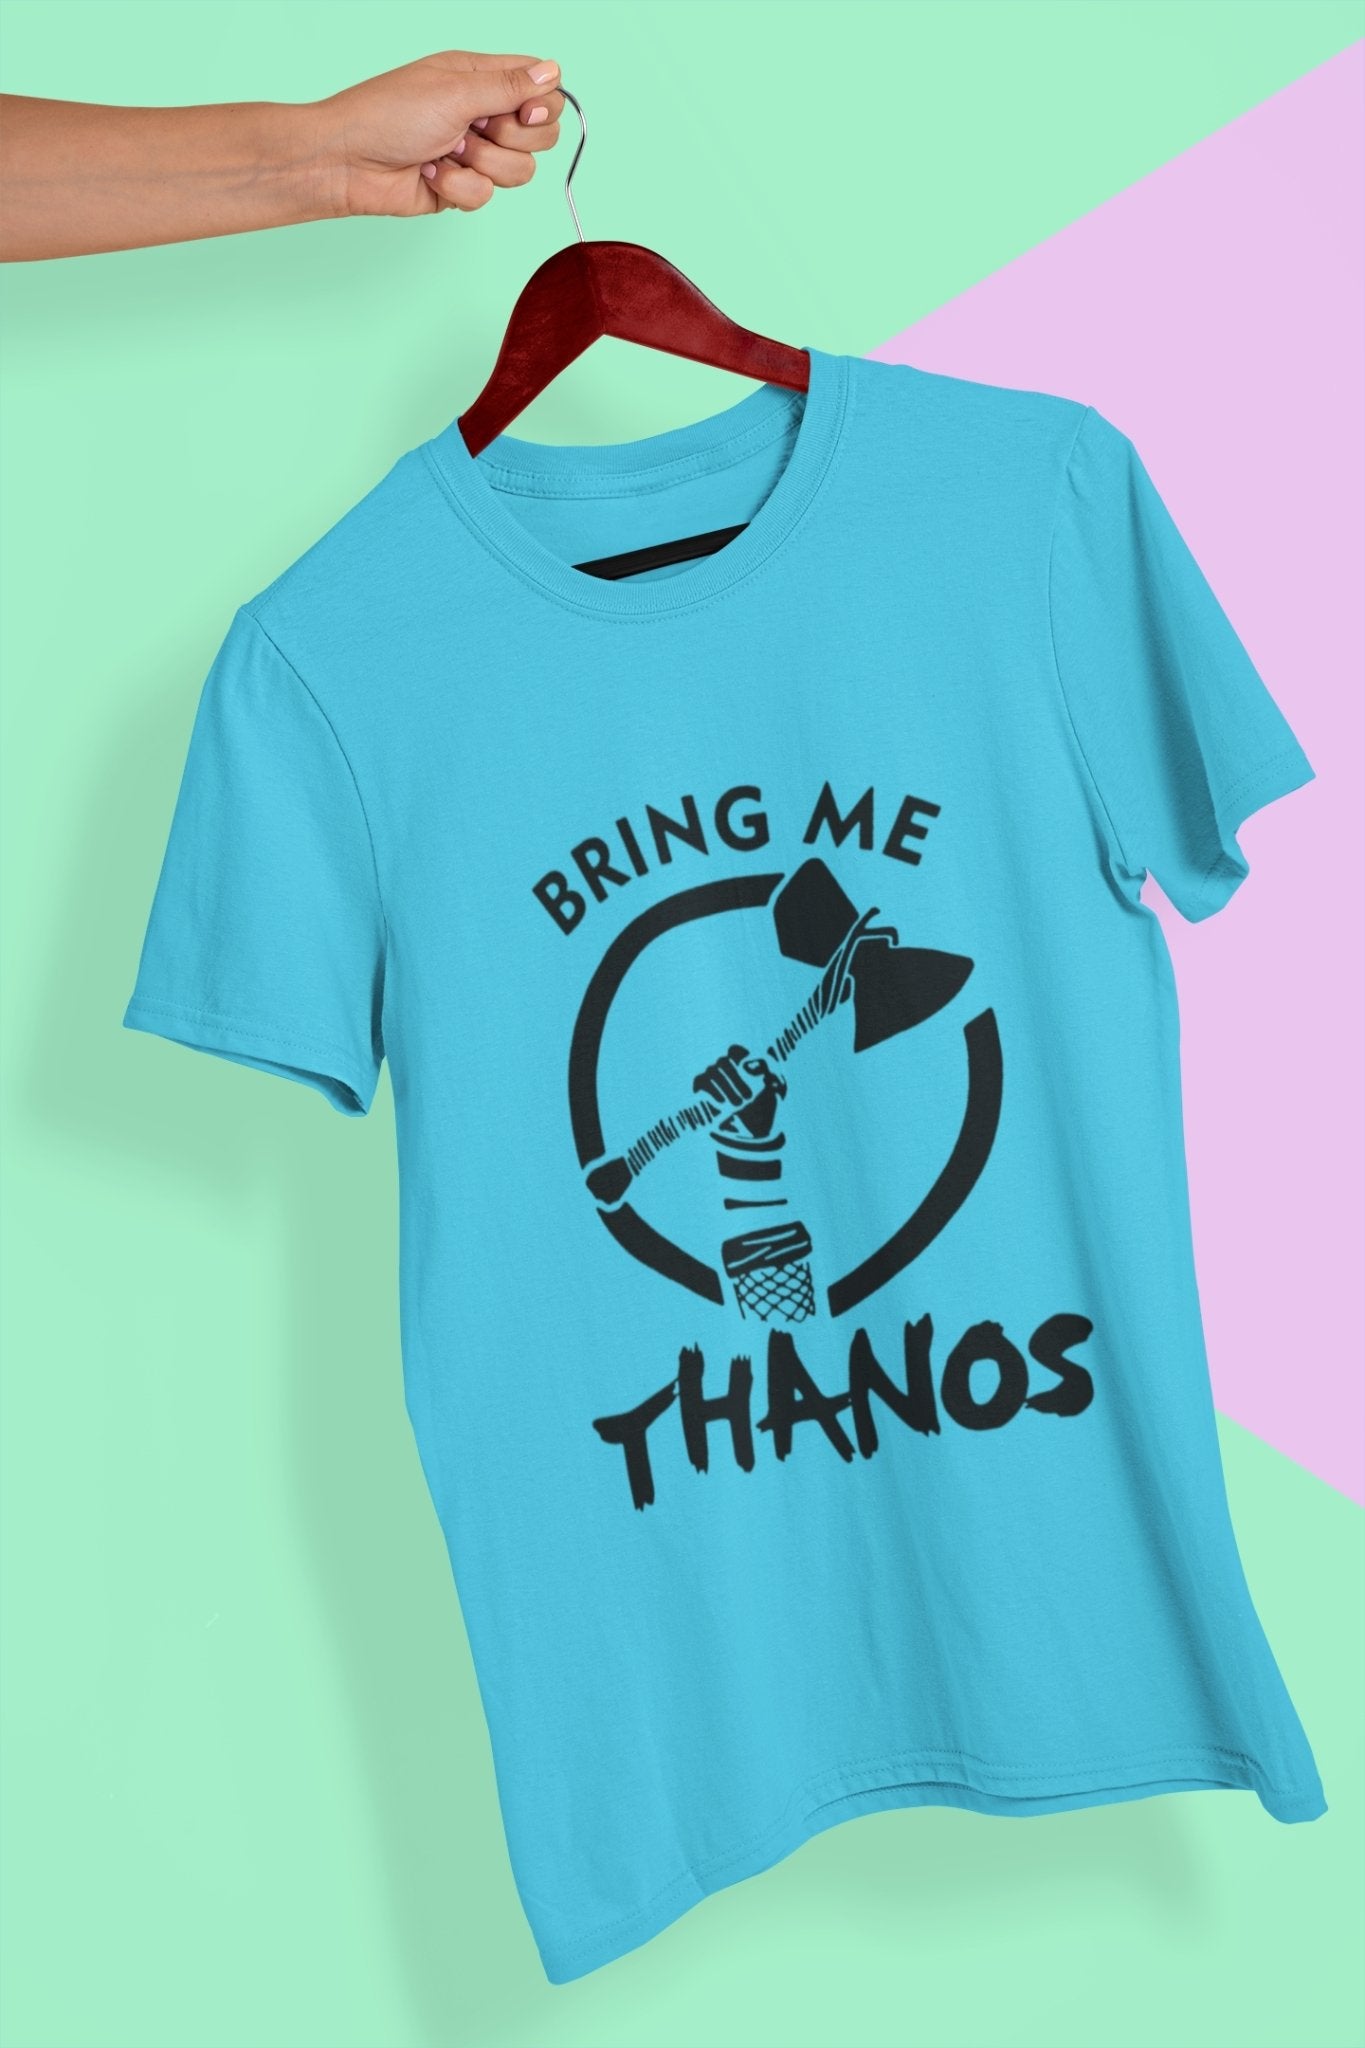 Bring Me Thanos Women Half Sleeves T-shirt- FunkyTeesClub - Funky Tees Club